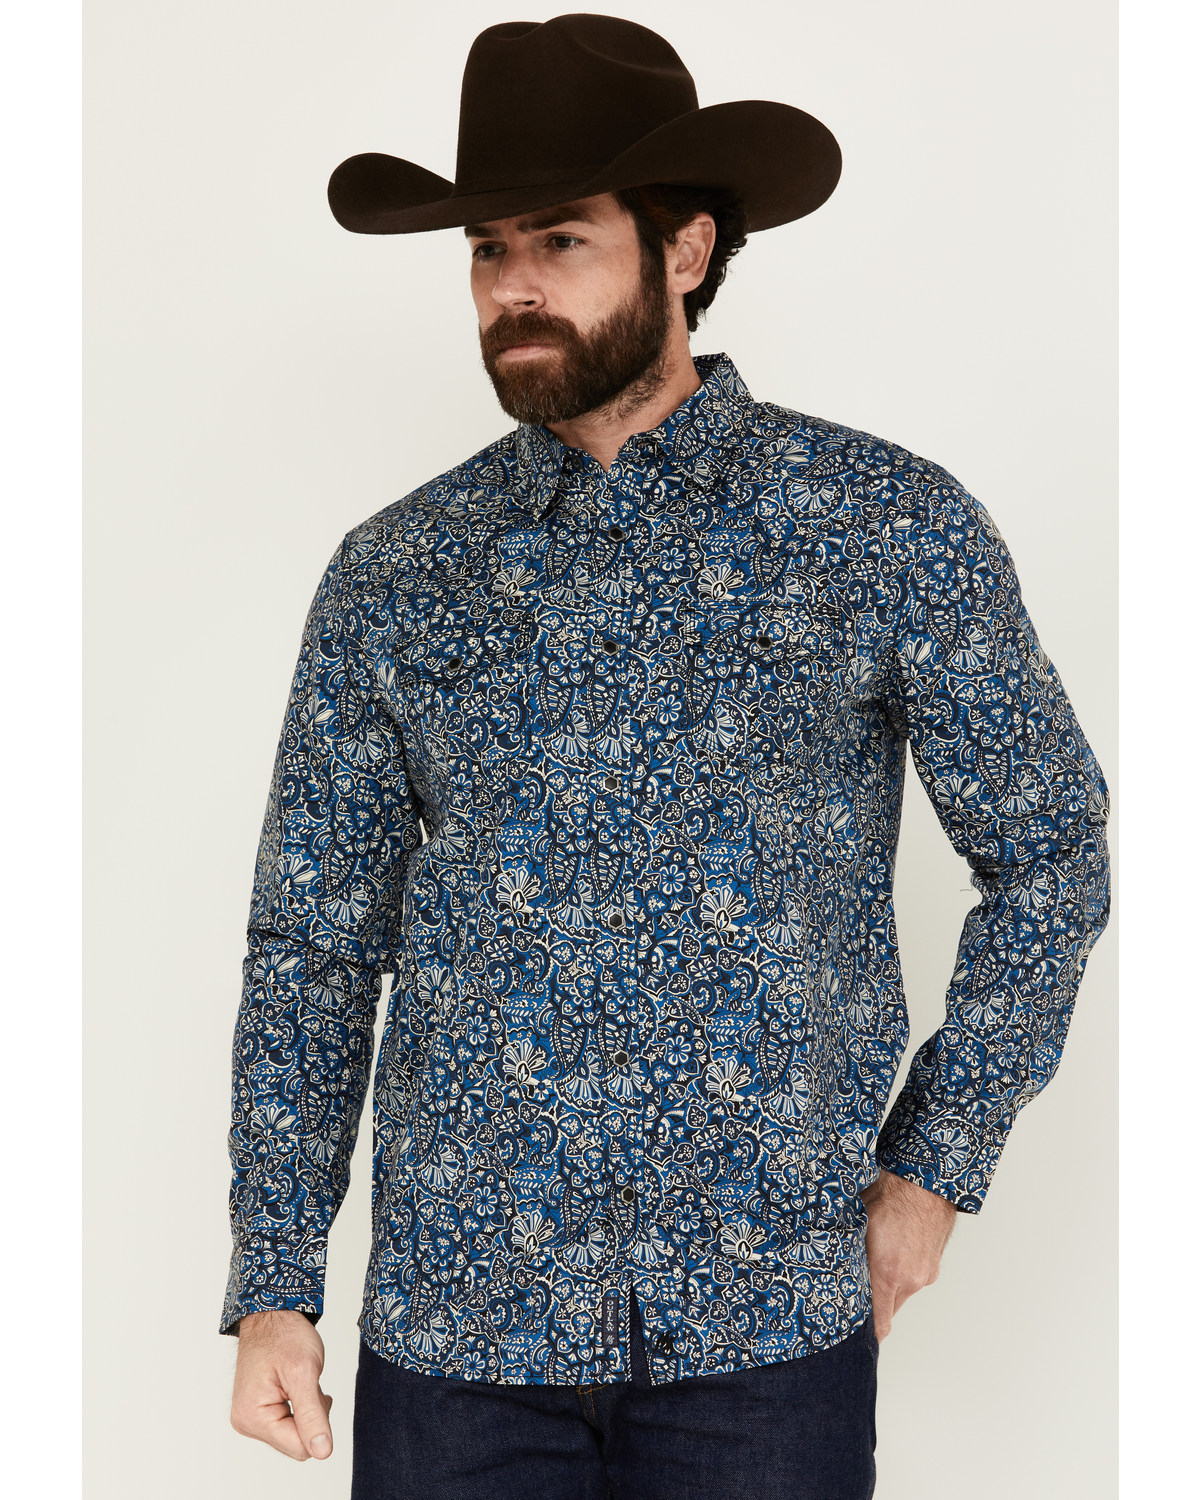 Moonshine Spirit Men's Verano Floral Paisley Print Long Sleeve Snap Western Shirt